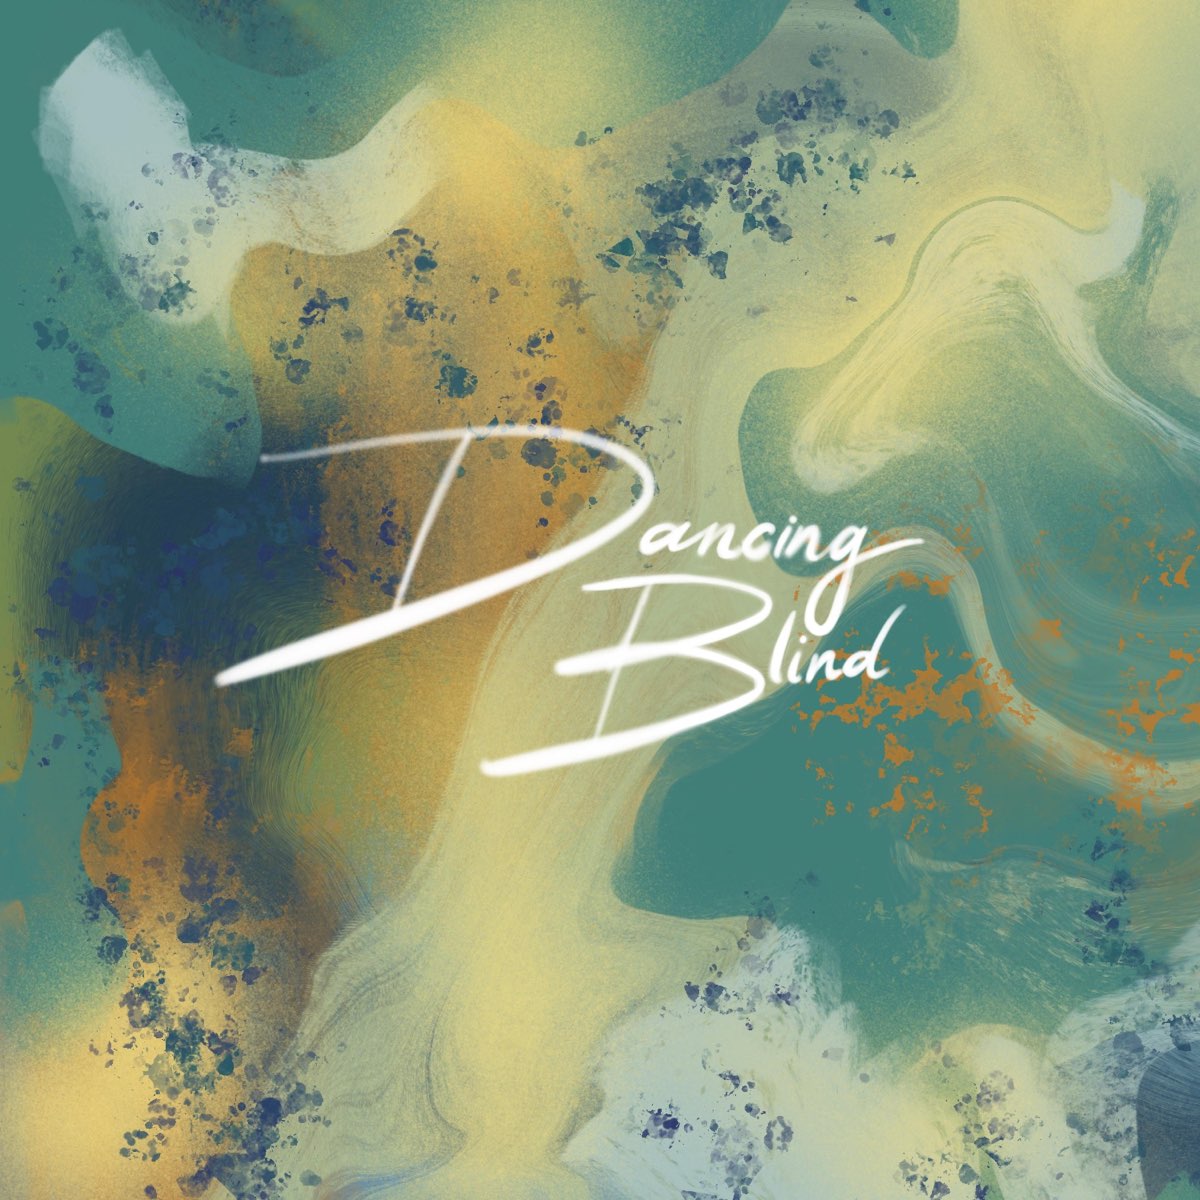 ‎Dancing Blind - Single - Album by Chazak - Apple Music